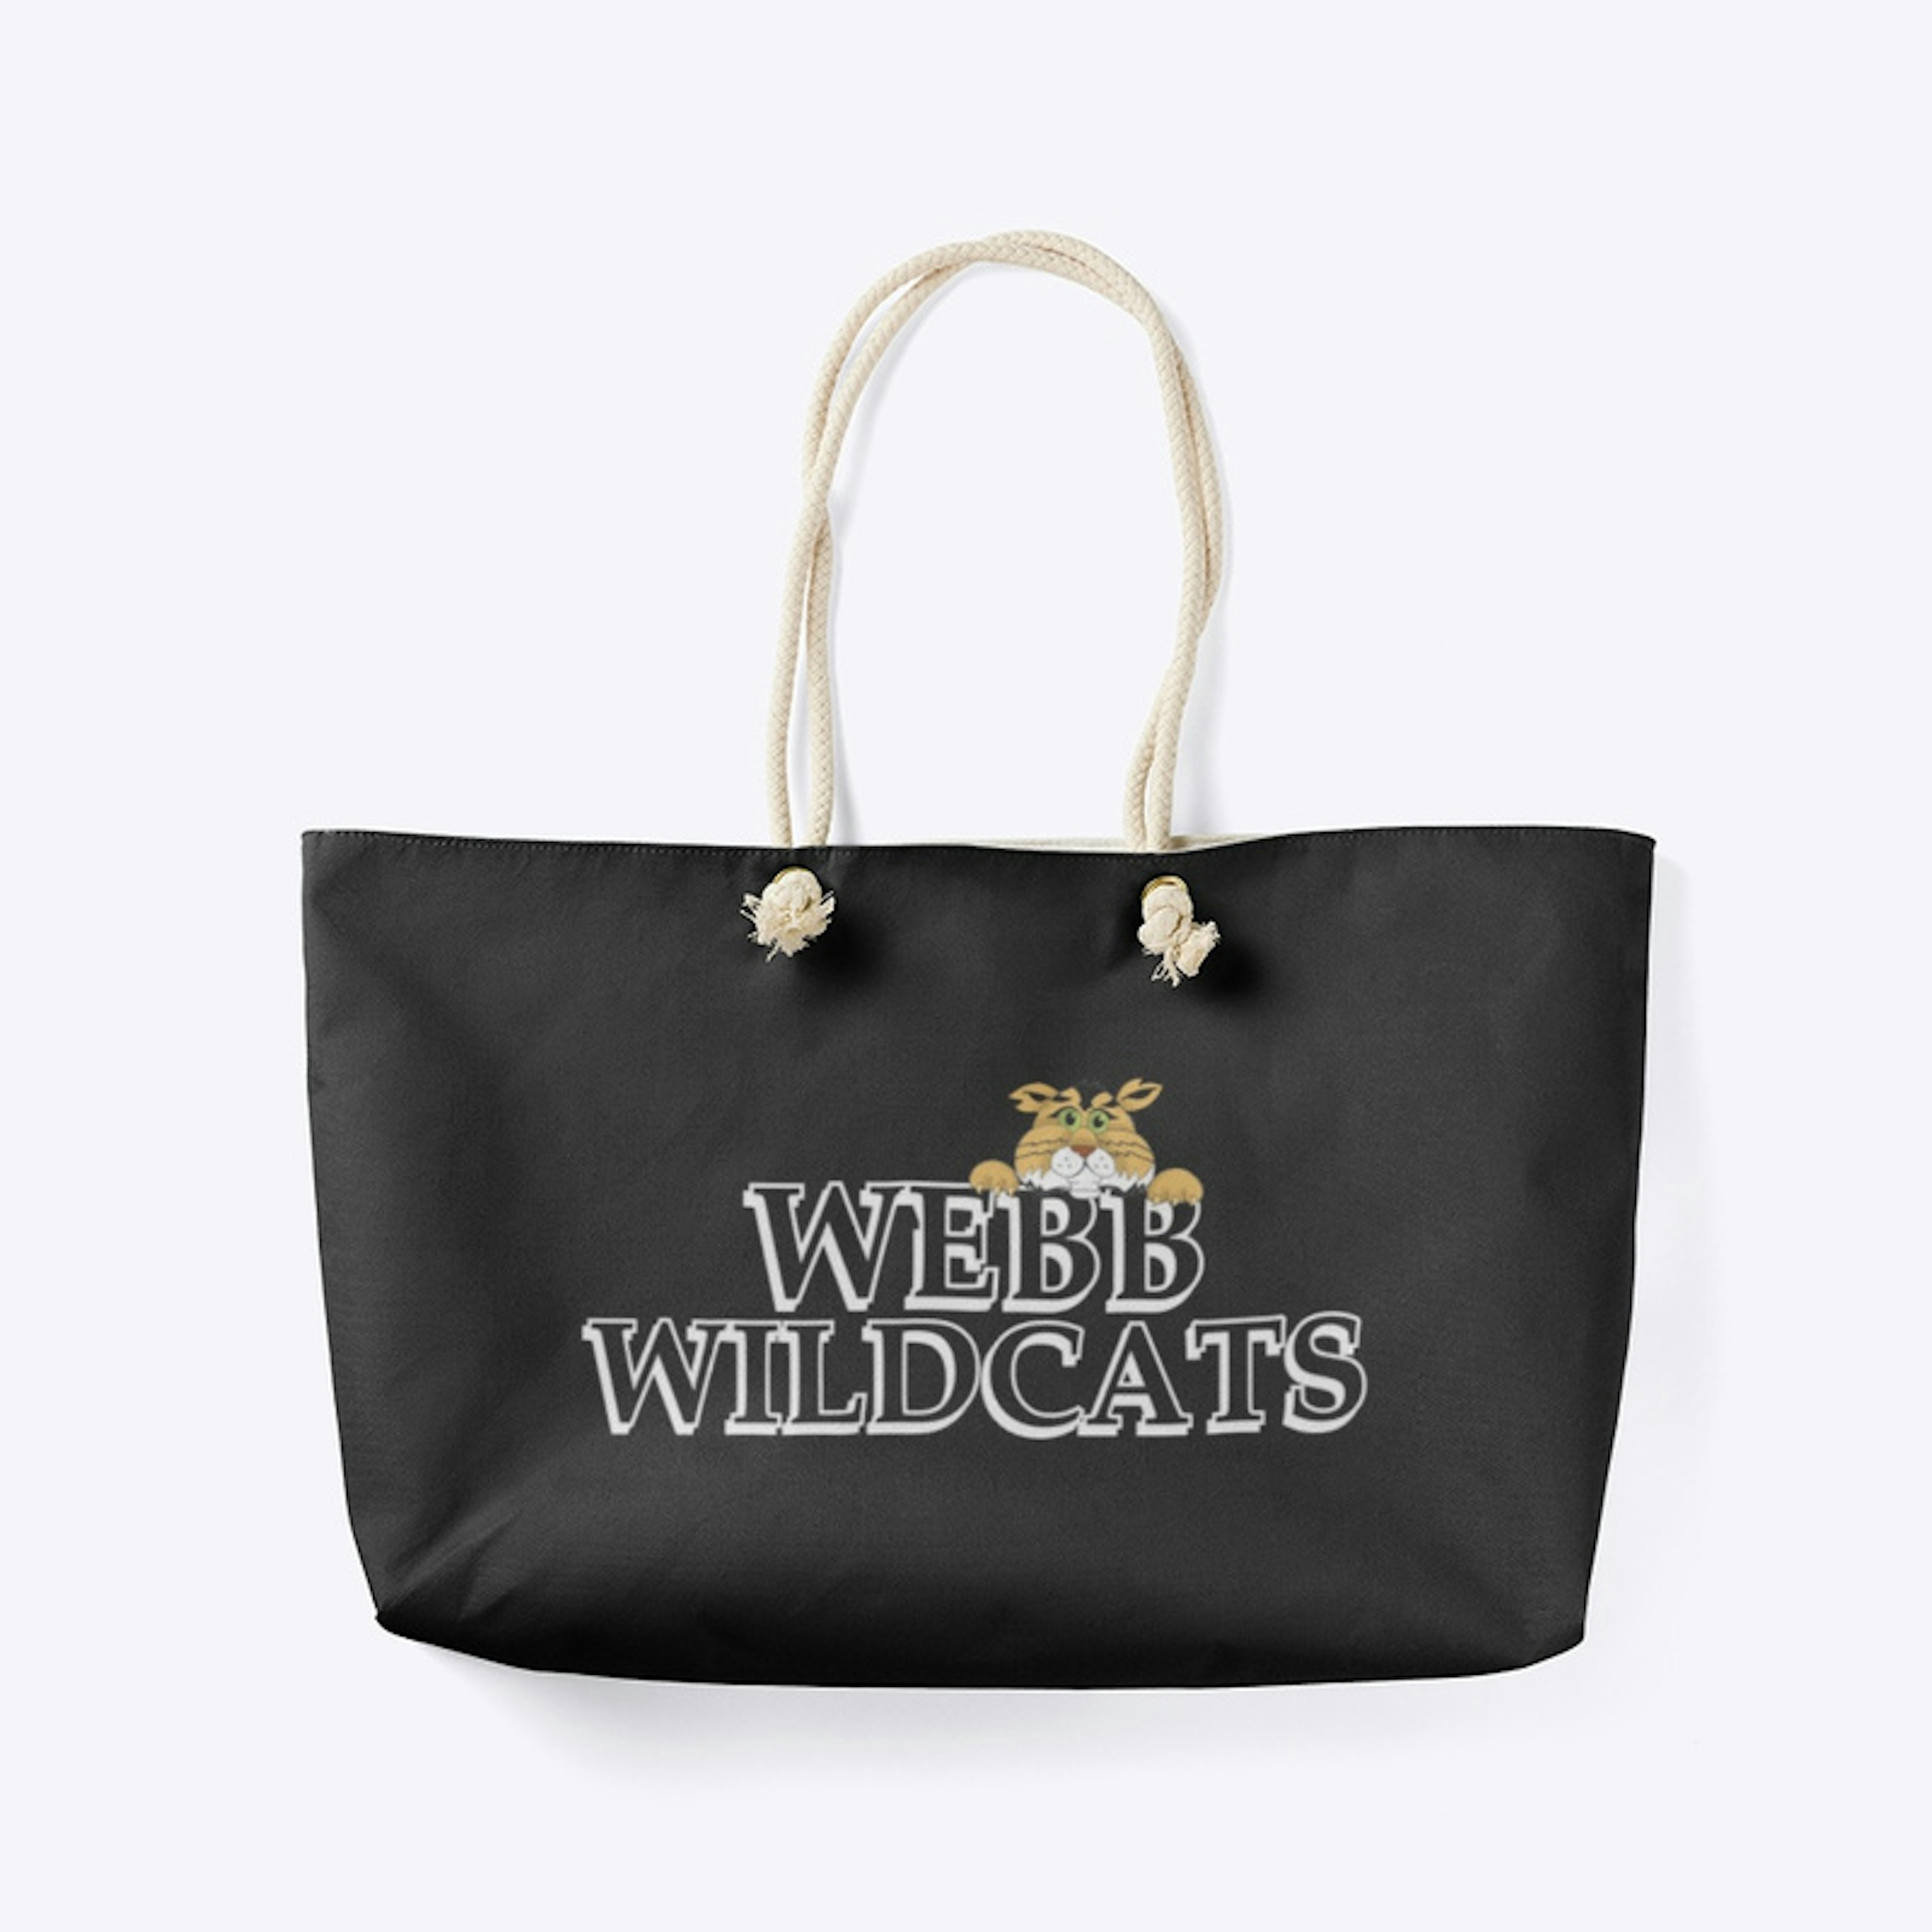 Webb Wildcats Tote (multi color)